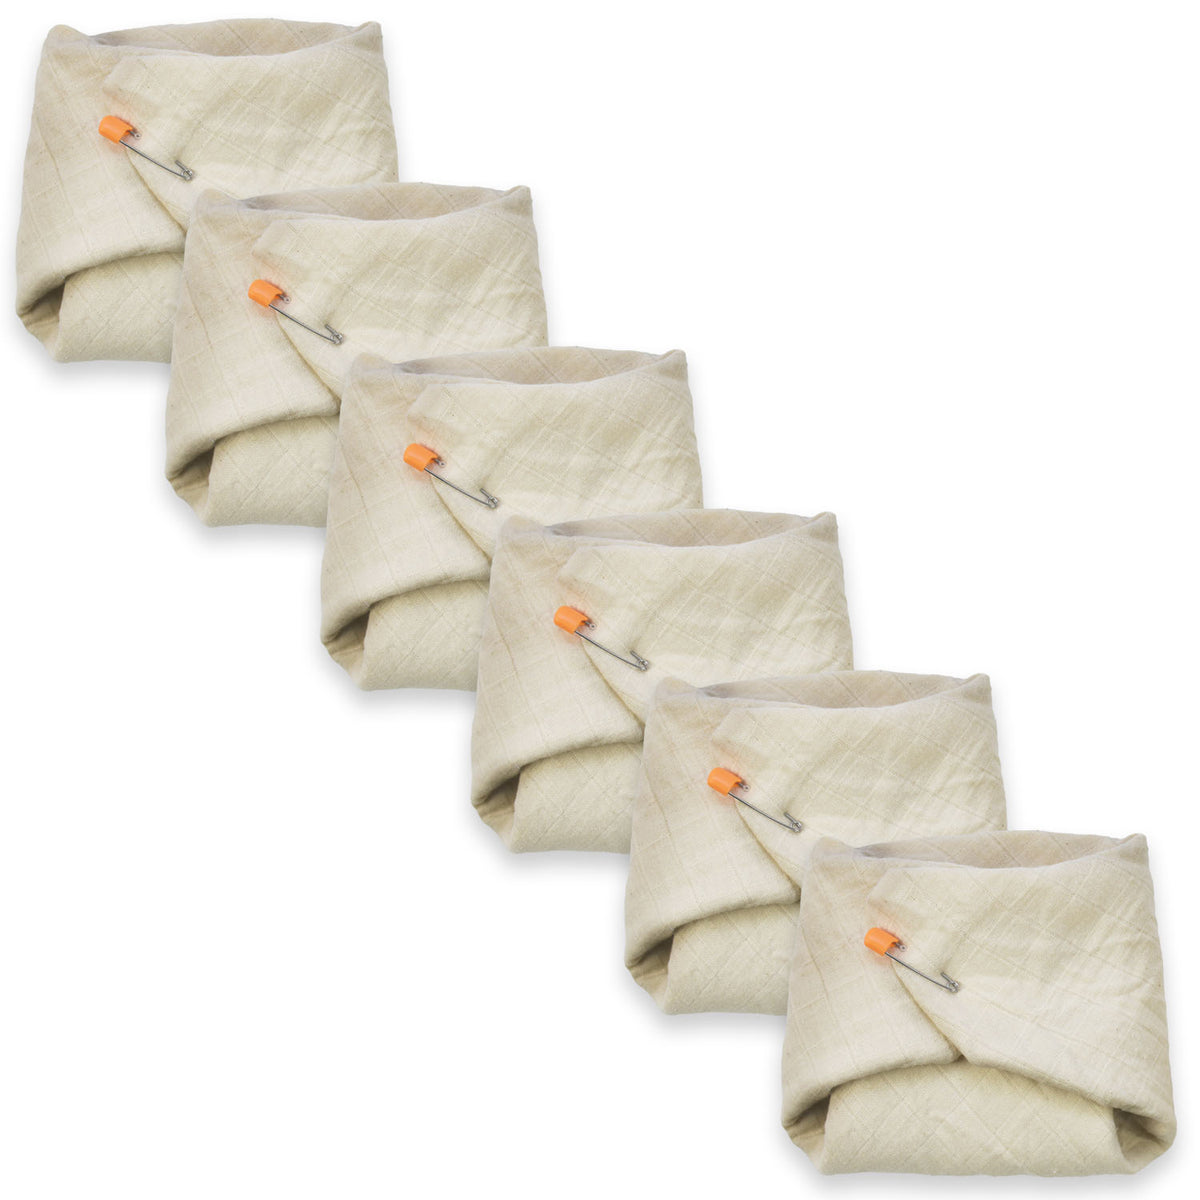 OsoCozy Muslin Flat Organic Cloth Diapers (6 Pack) Newborn Fits 6-12 Pounds